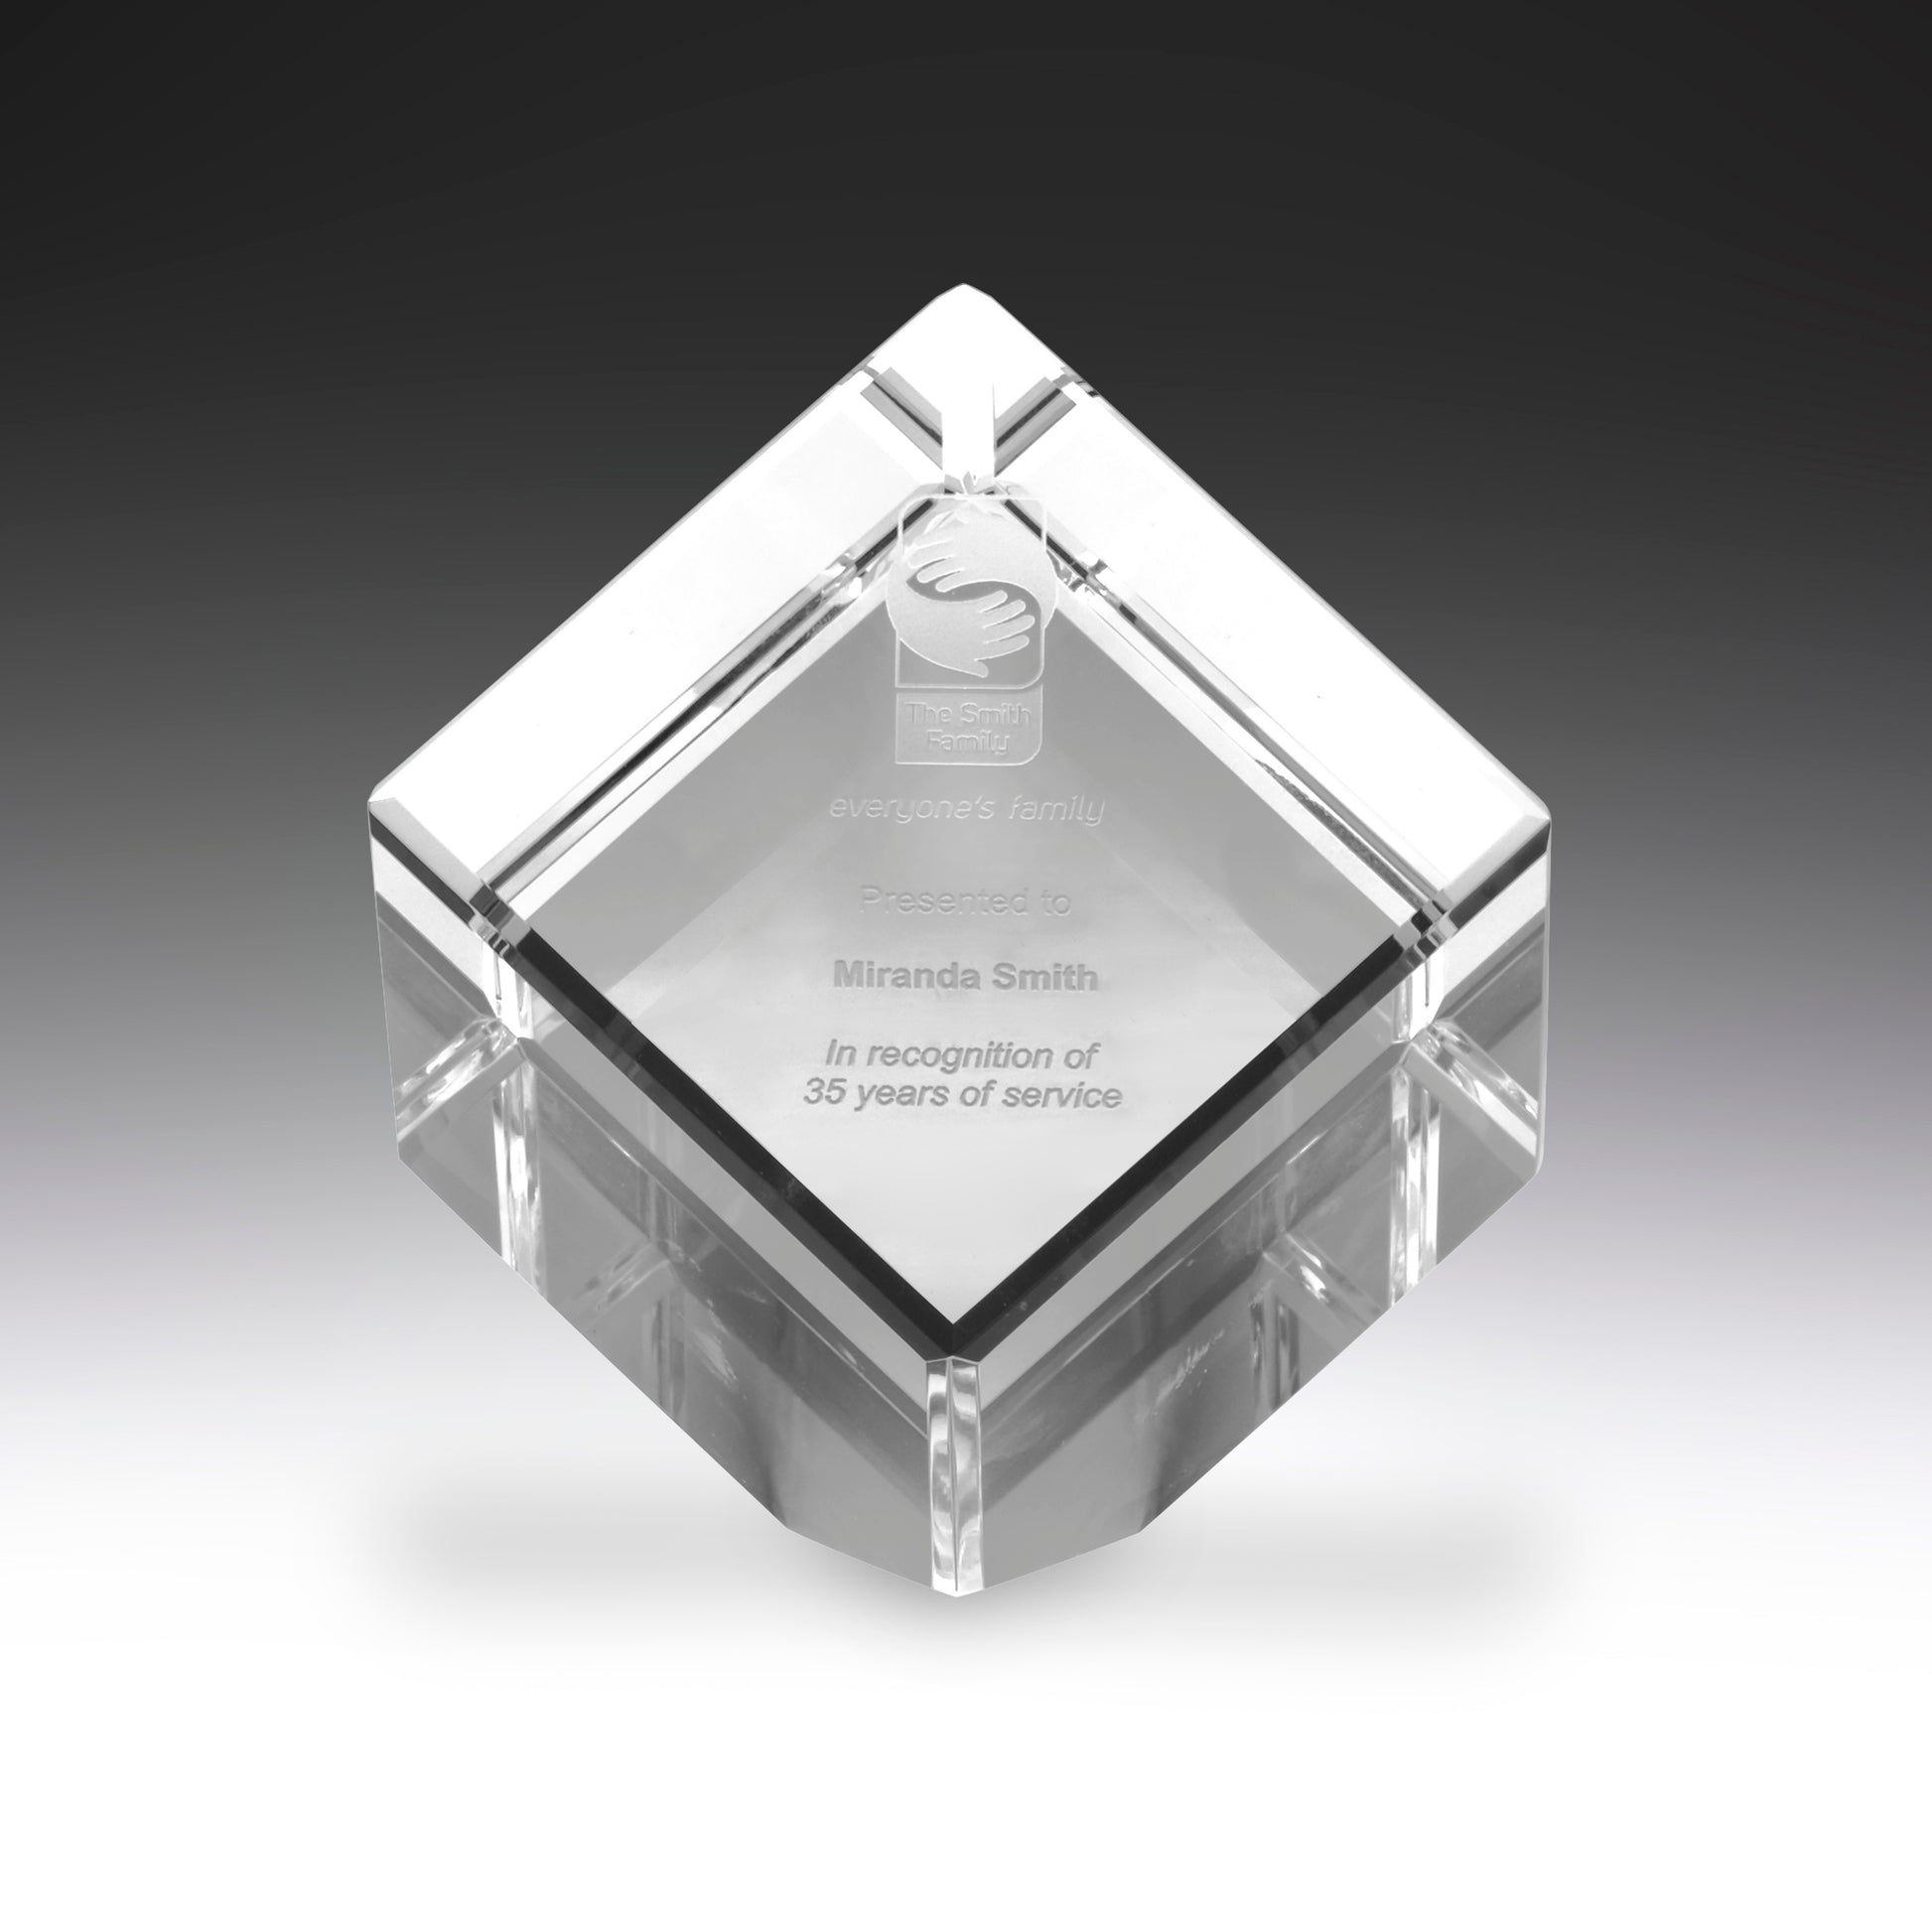 CC650 Crystal Award